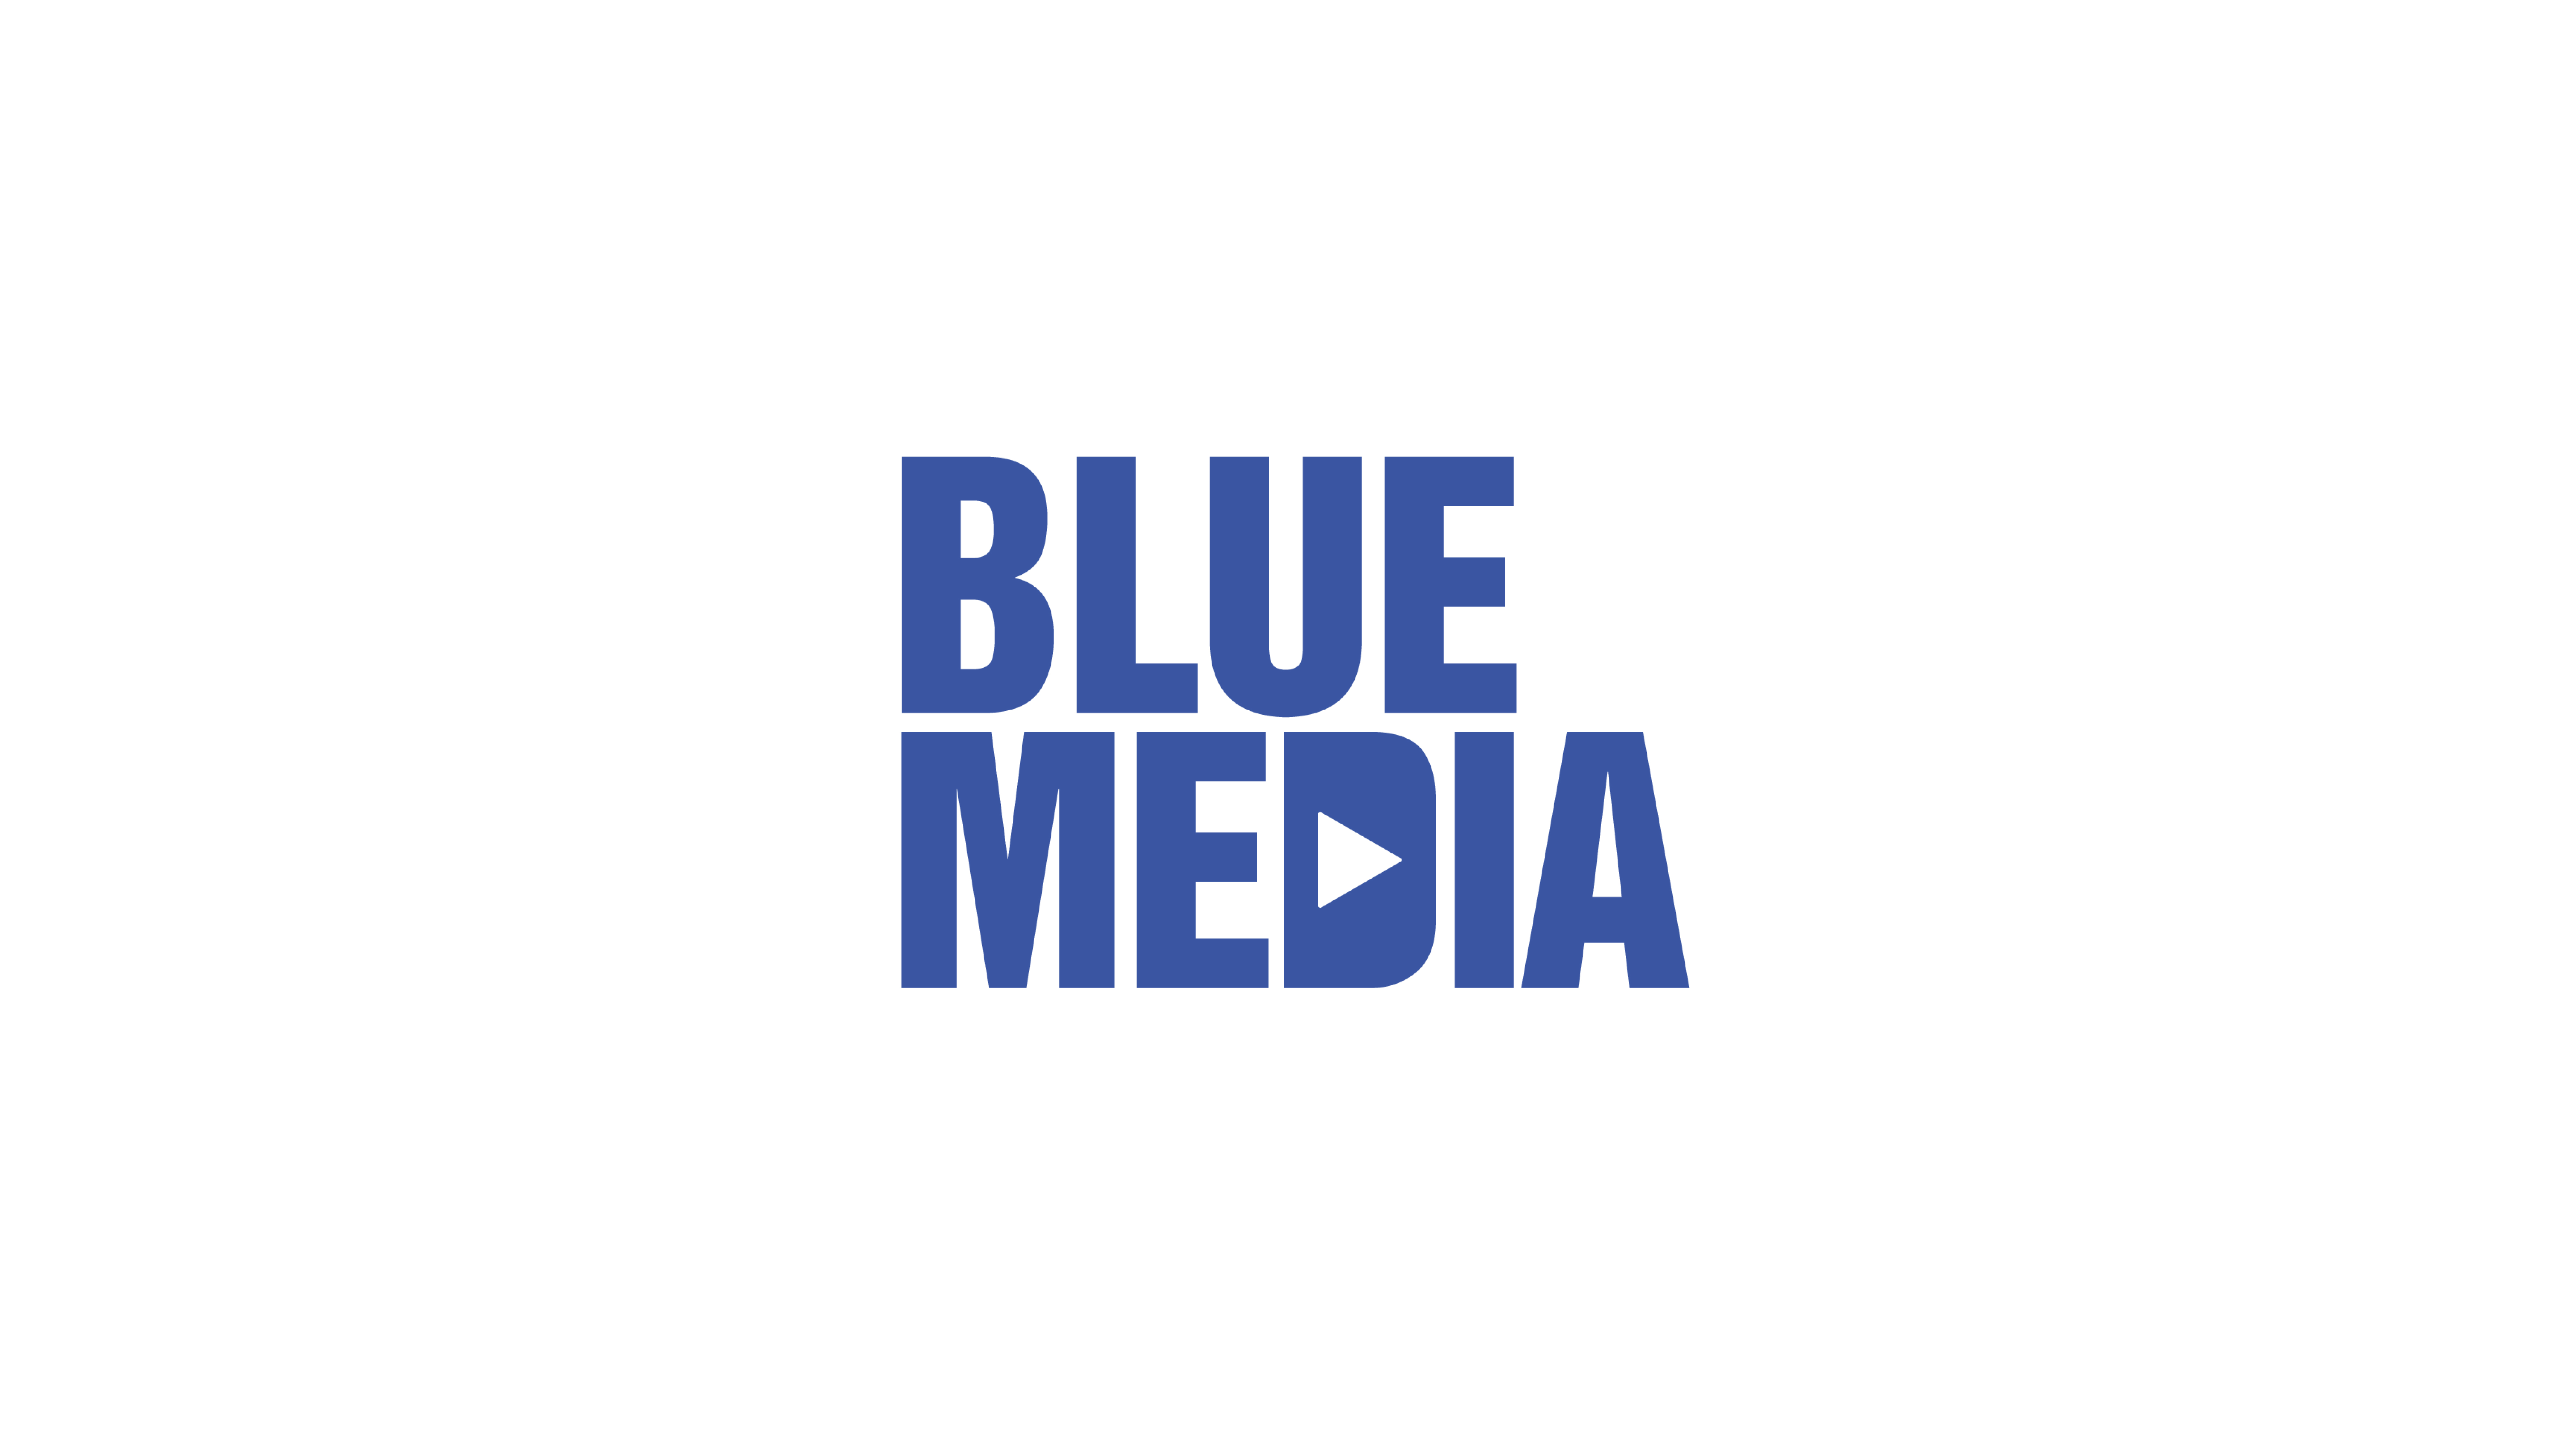   video production "Blue media"